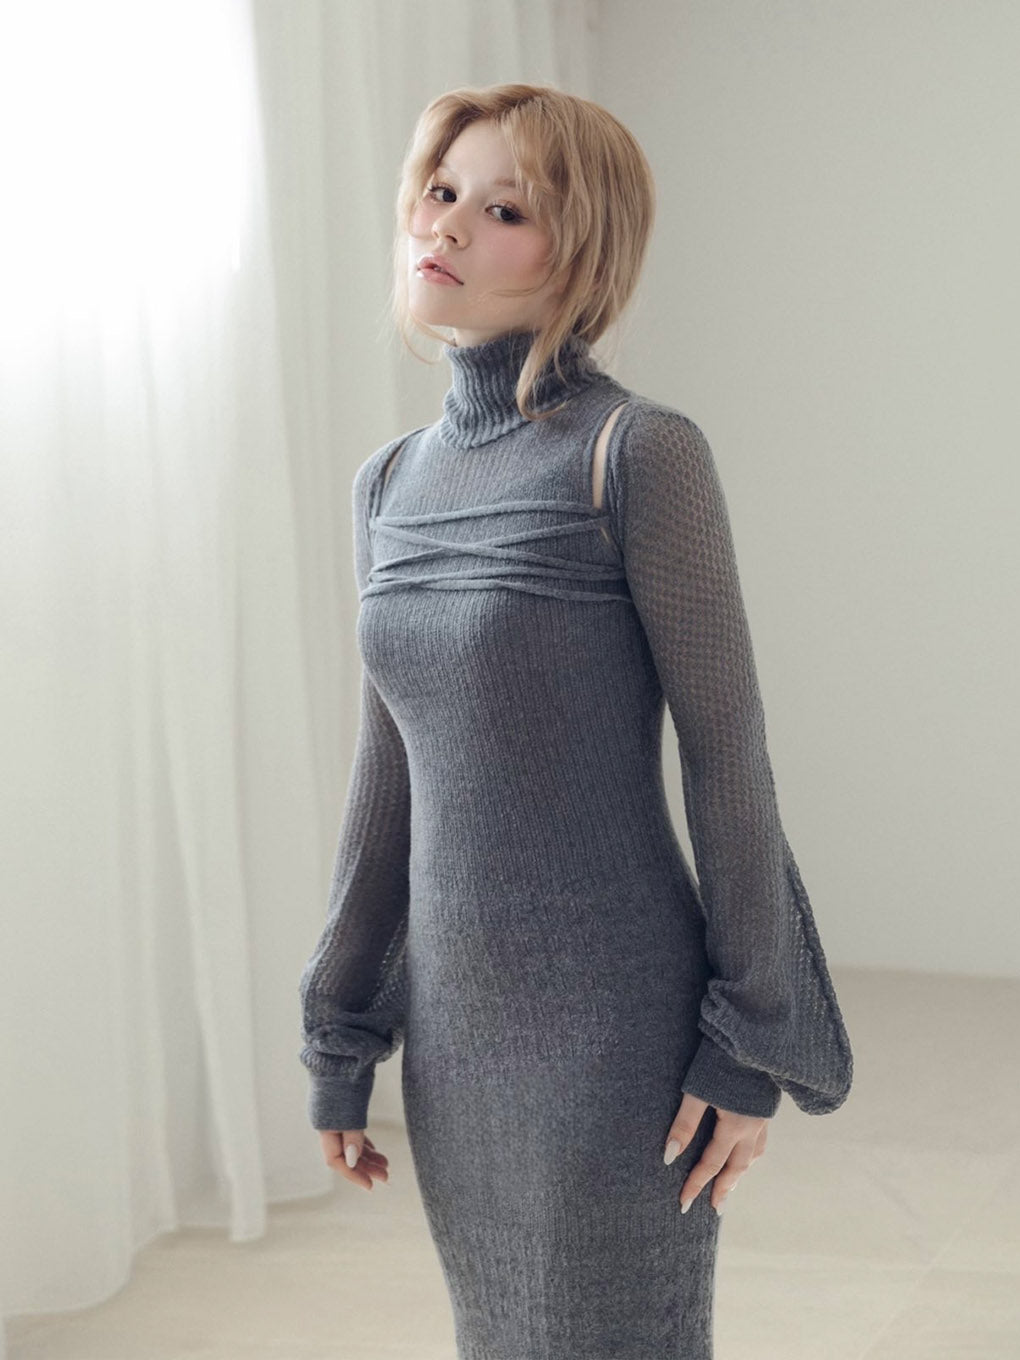 新品未使用andmarry Sophie seethrough knit dress